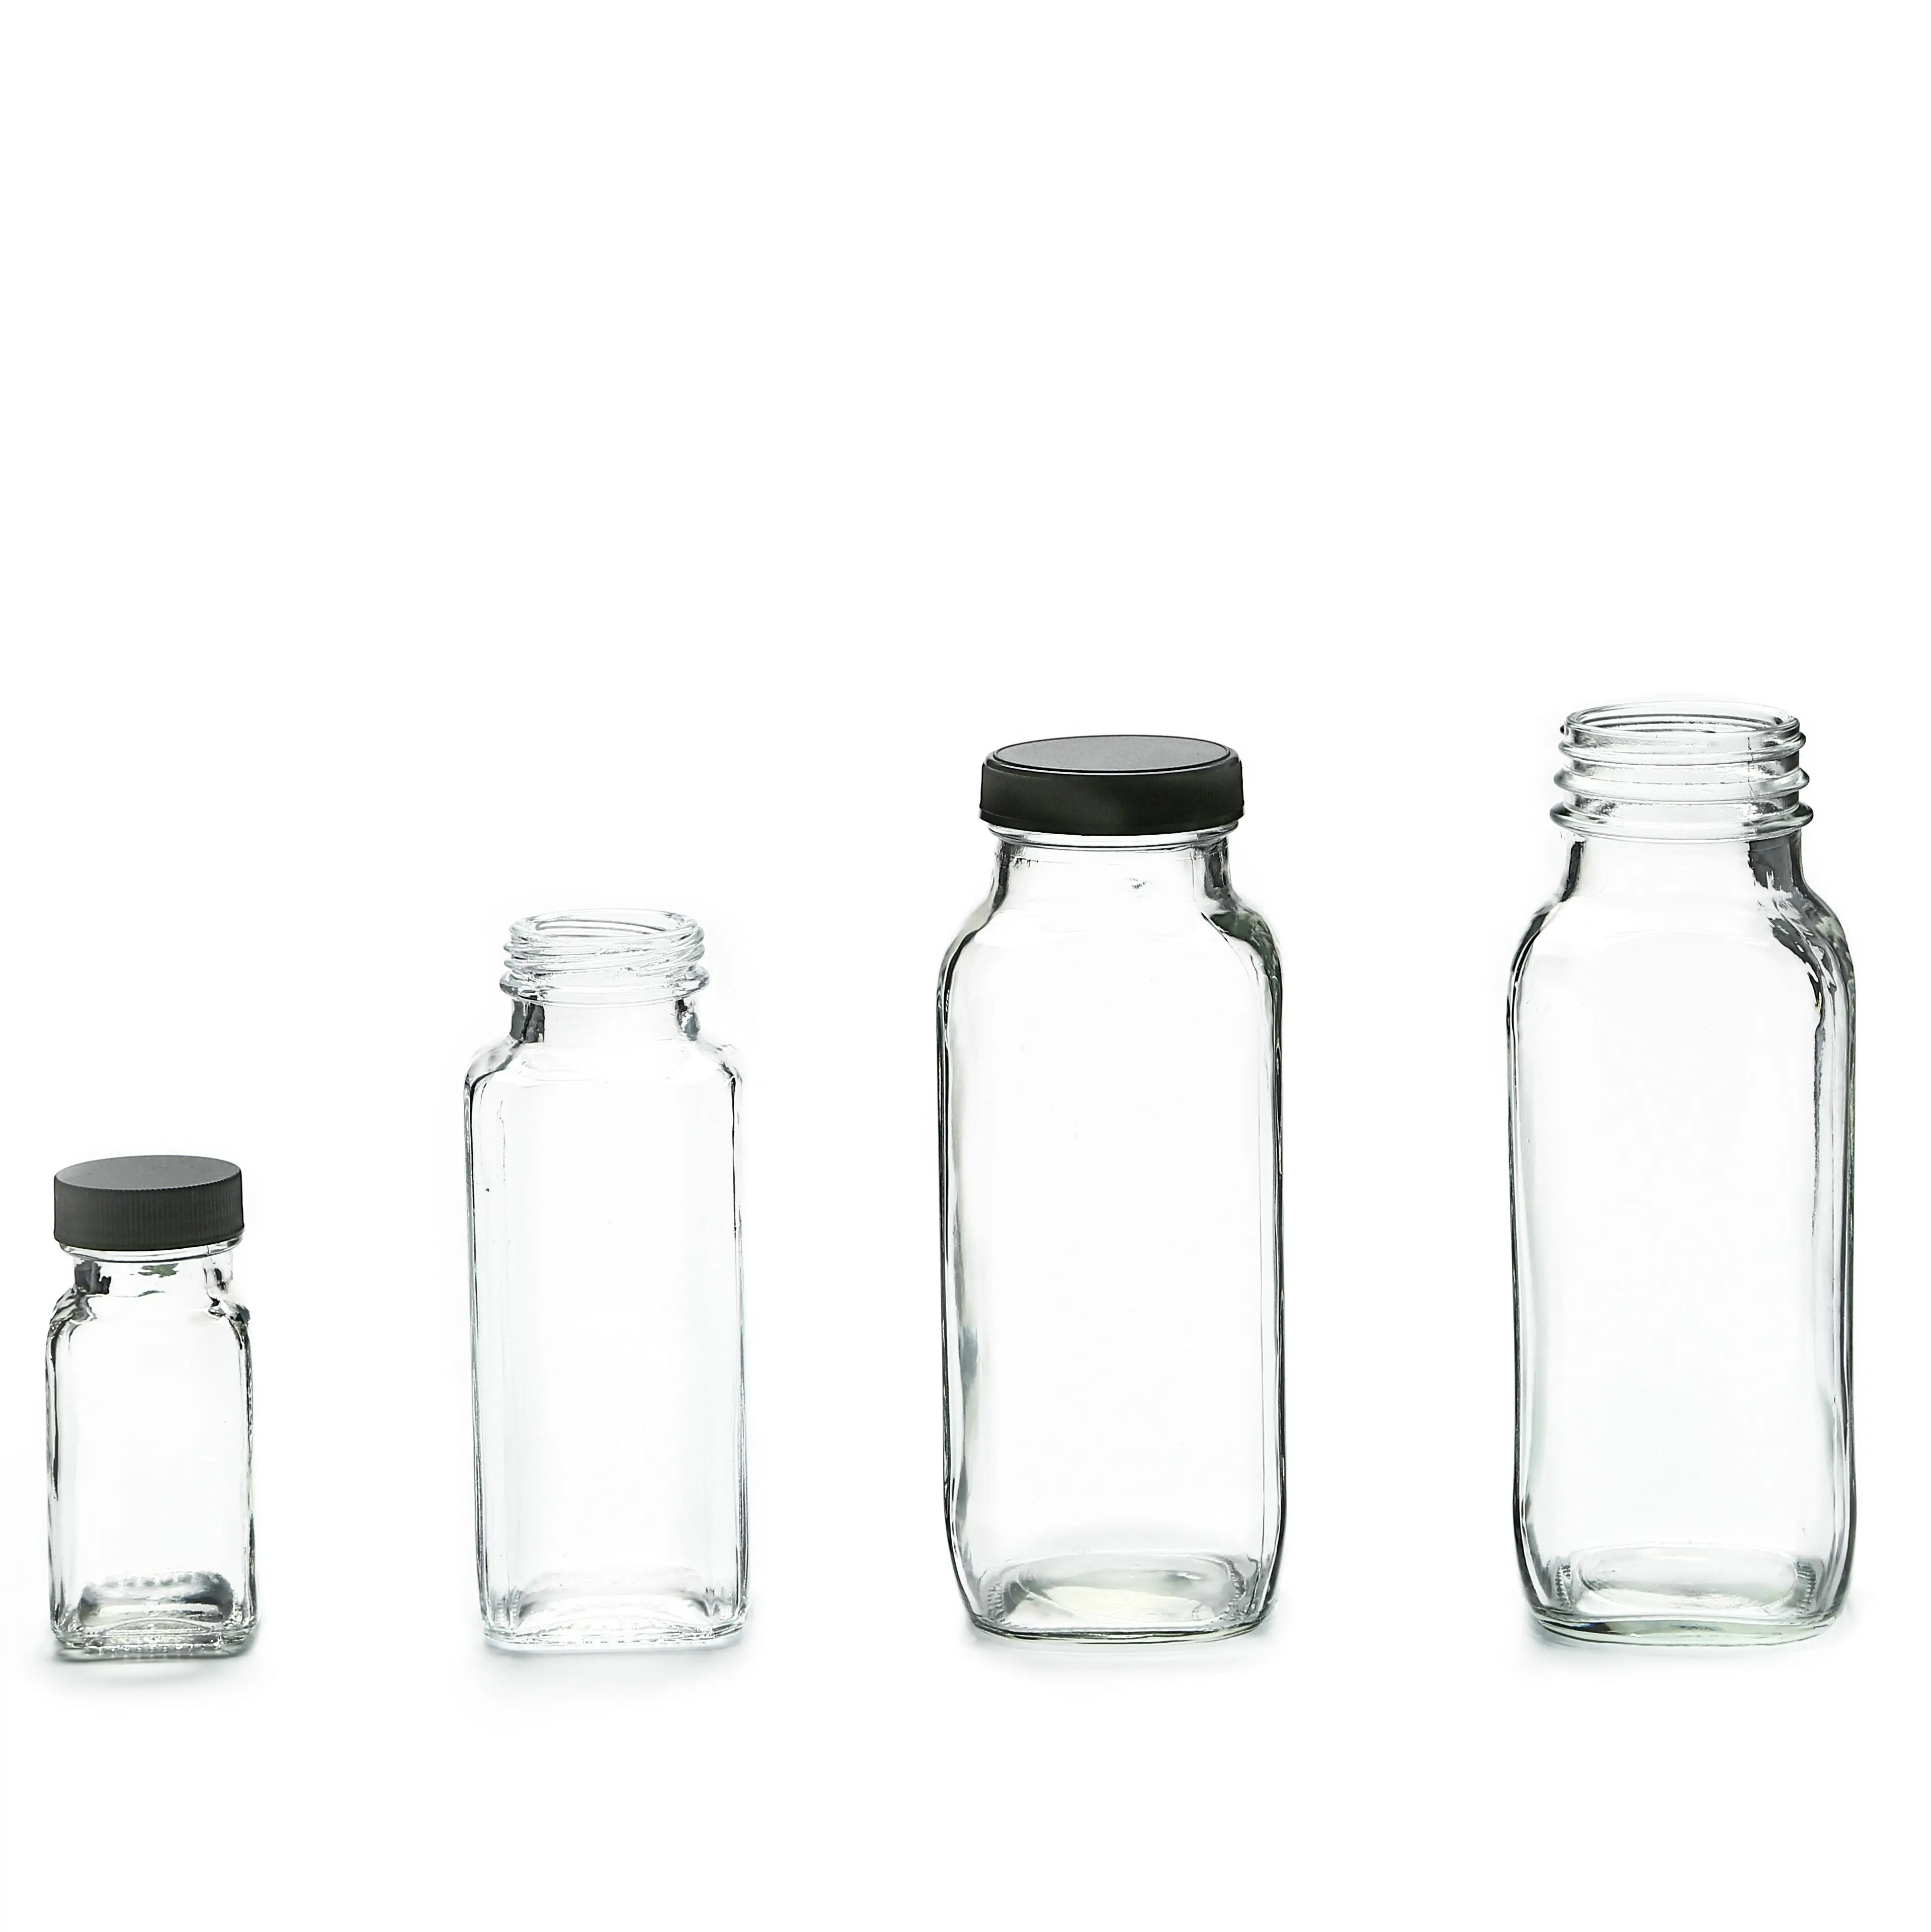 Botella de vidrio cuadrada francesa, botellas de café con prensa en frío, jugo de leche, con tapa de Metal o plástico, Grado Alimenticio, 120 ml, listo para enviar